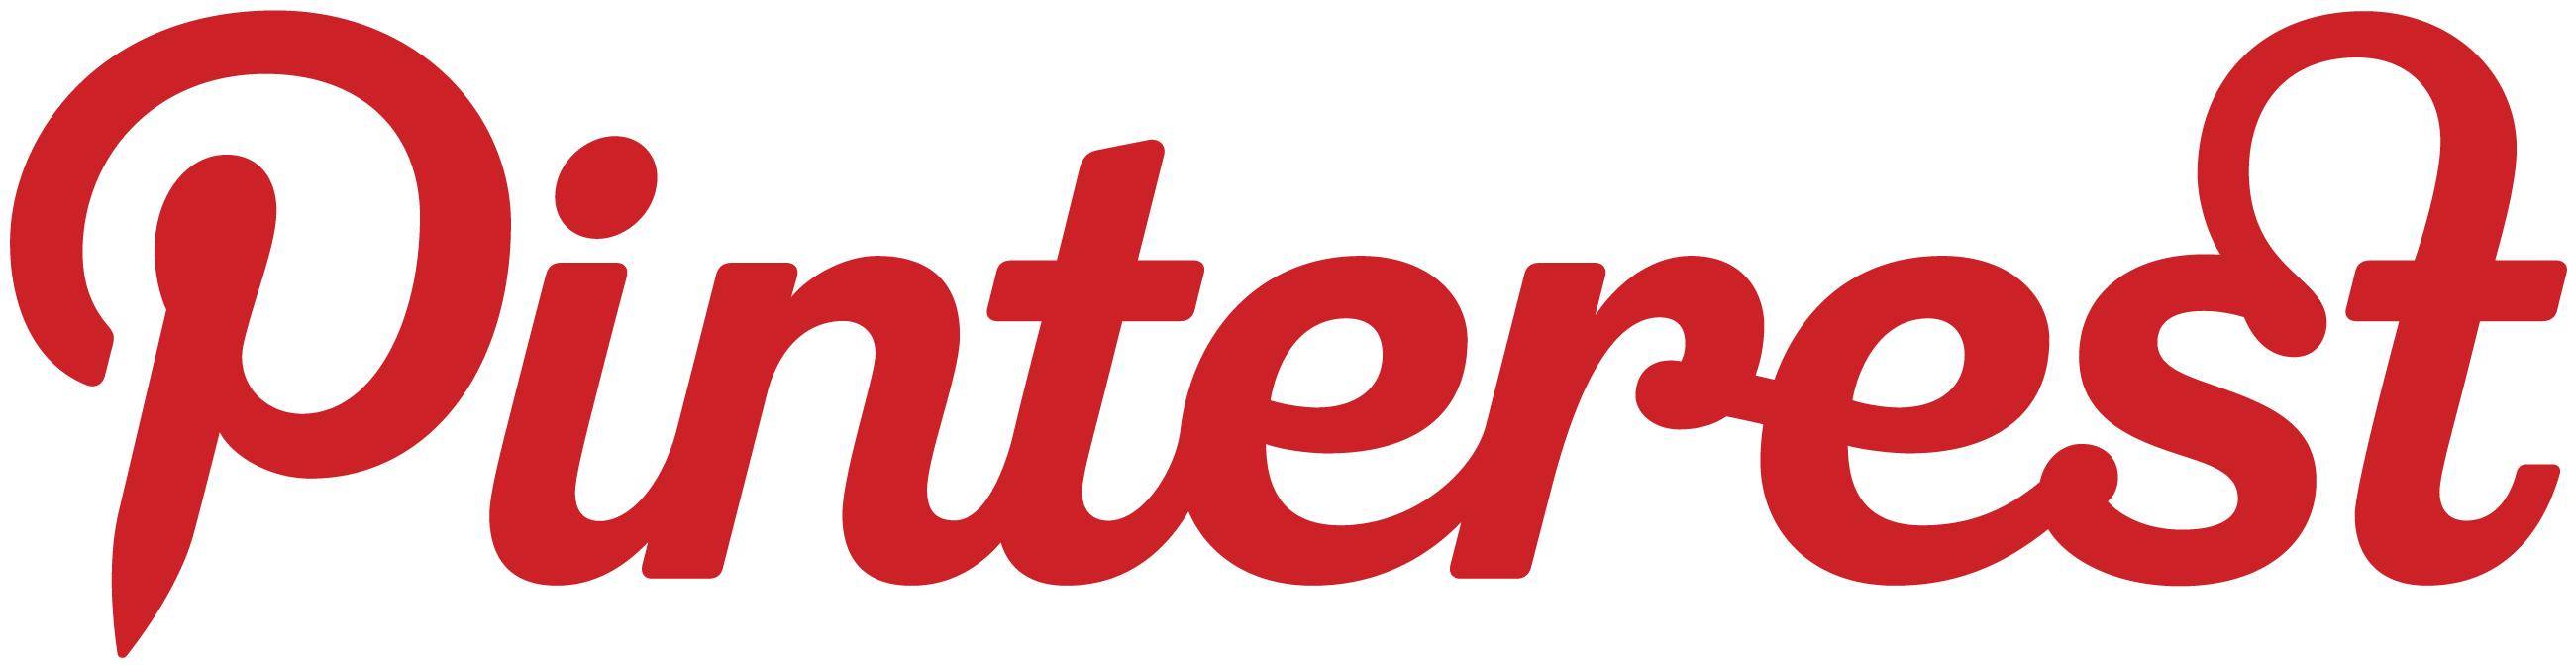 Pinterets Logo - pinterest logo red